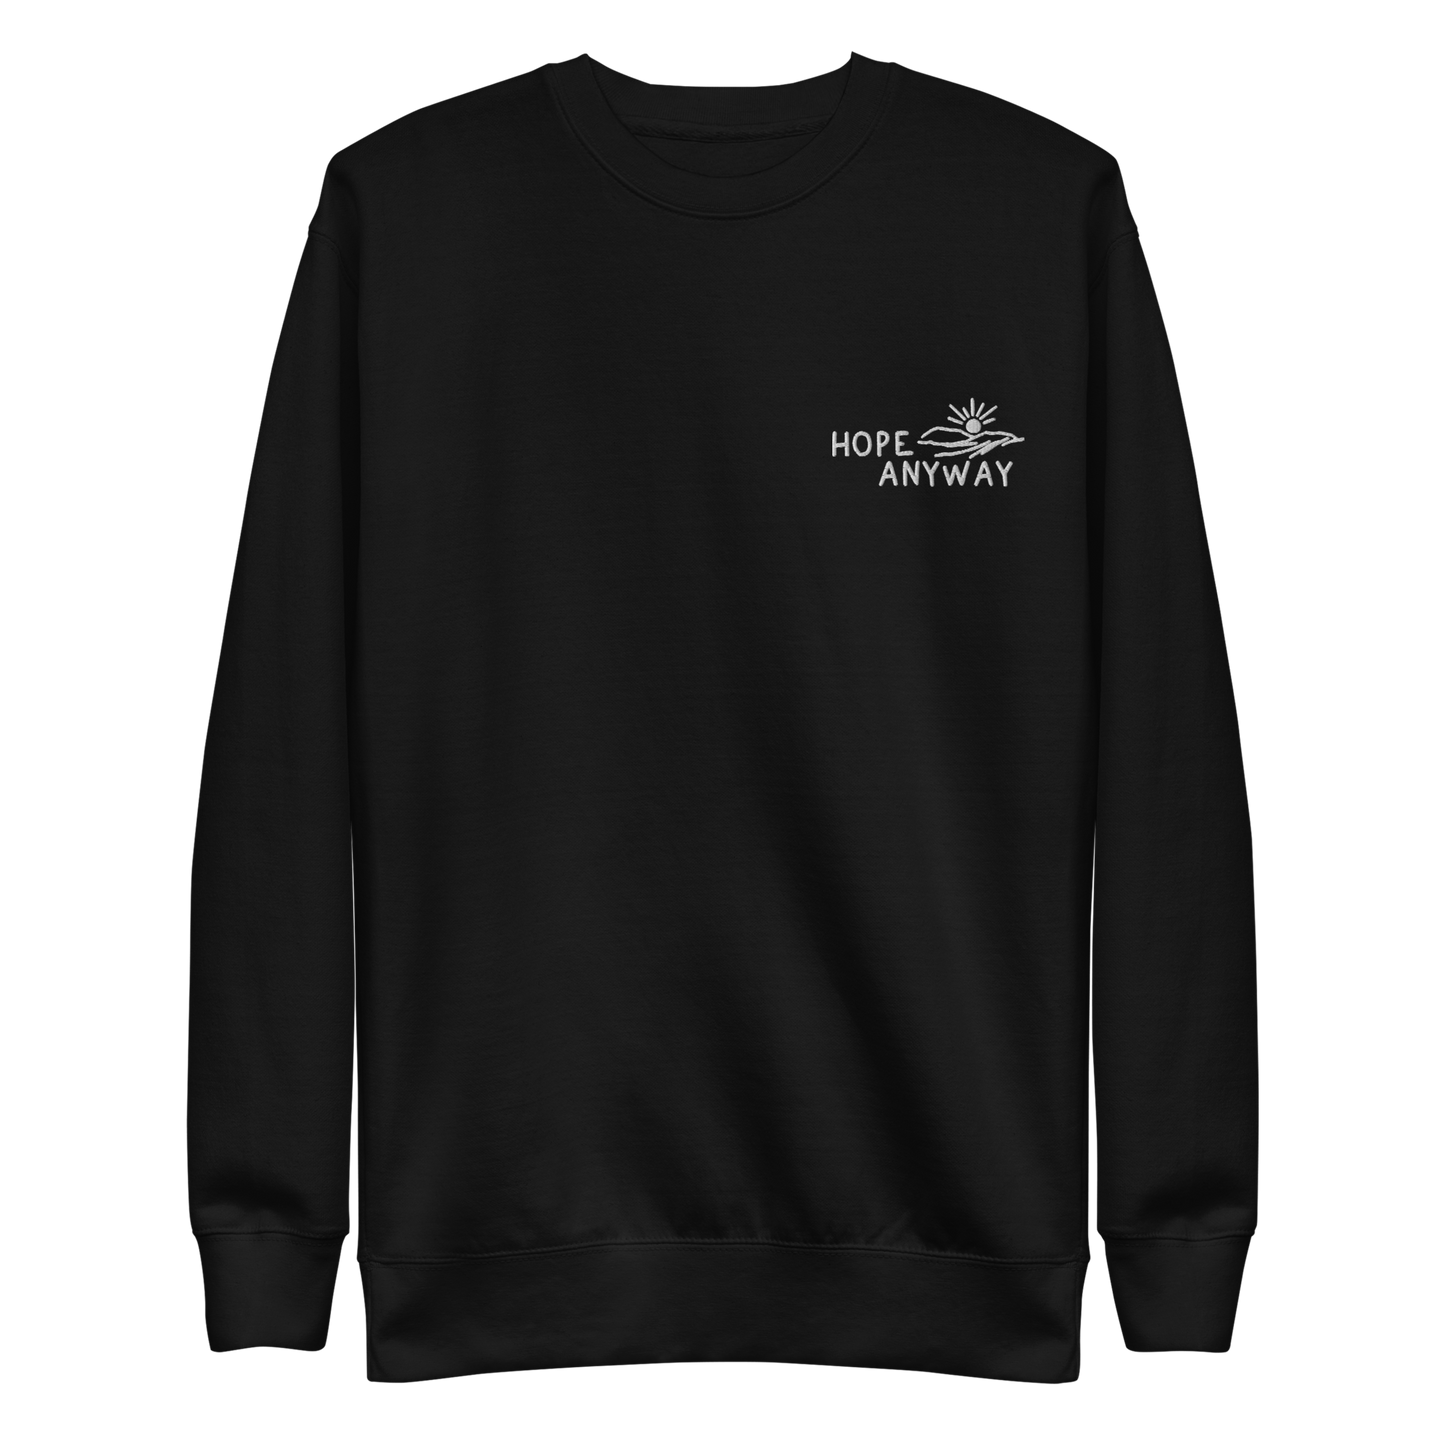 Hope Anyway - Unisex Premium Sweatshirt